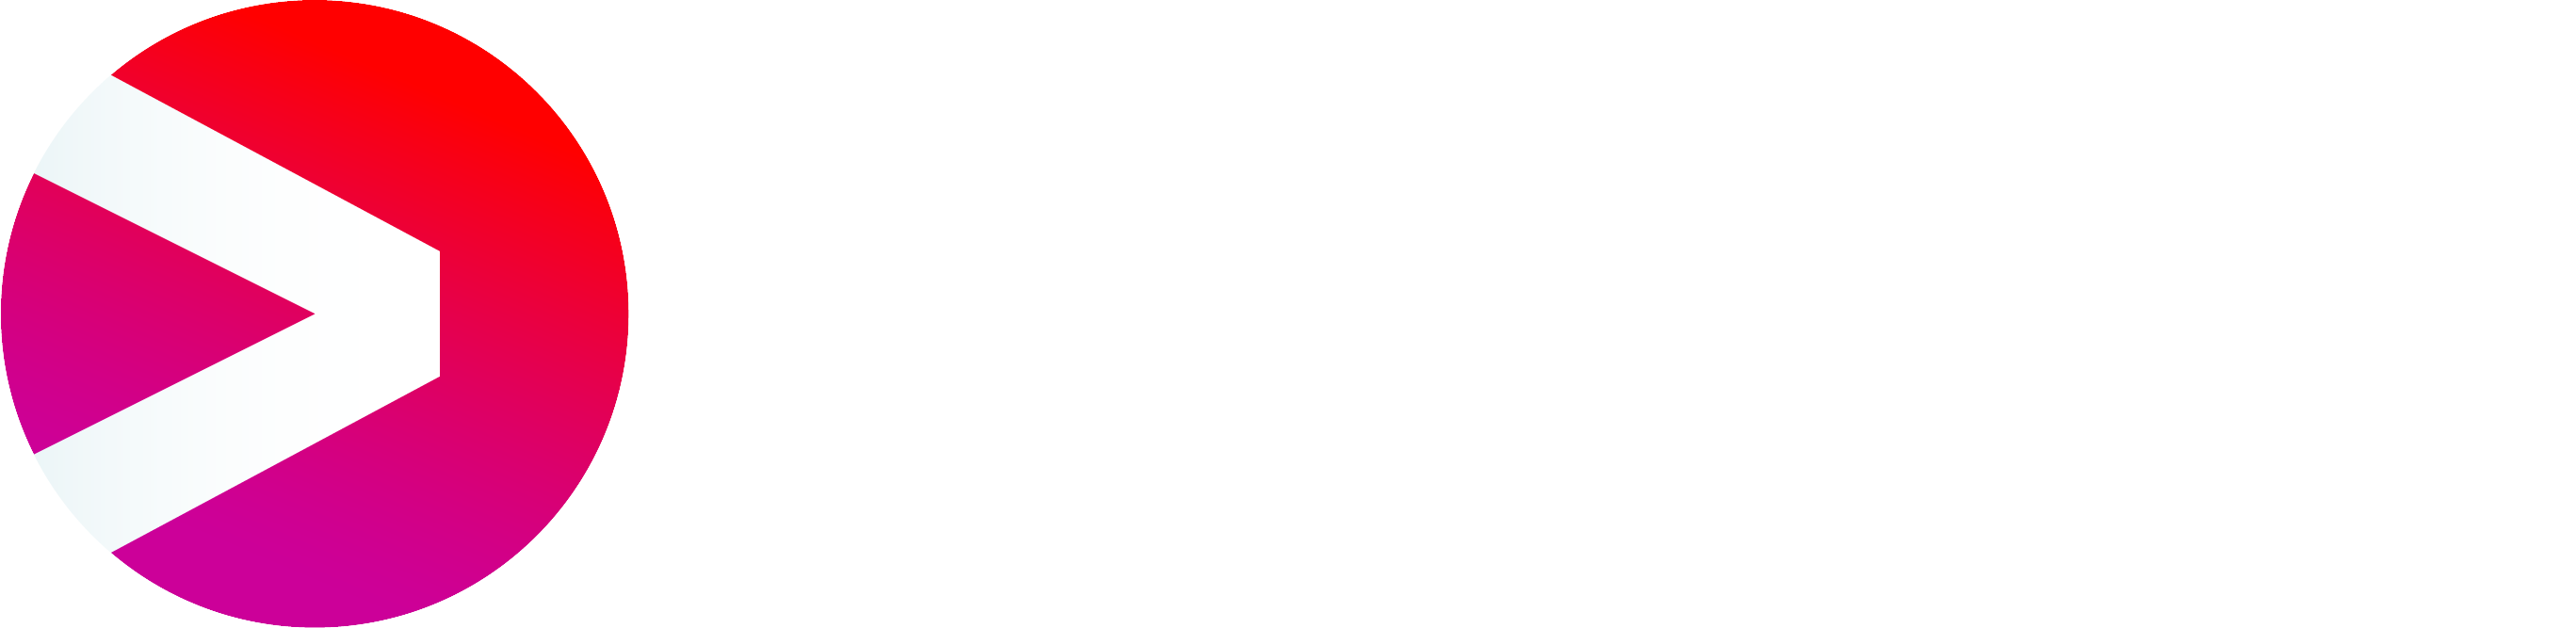 Tele2 Play - Viaplay logo